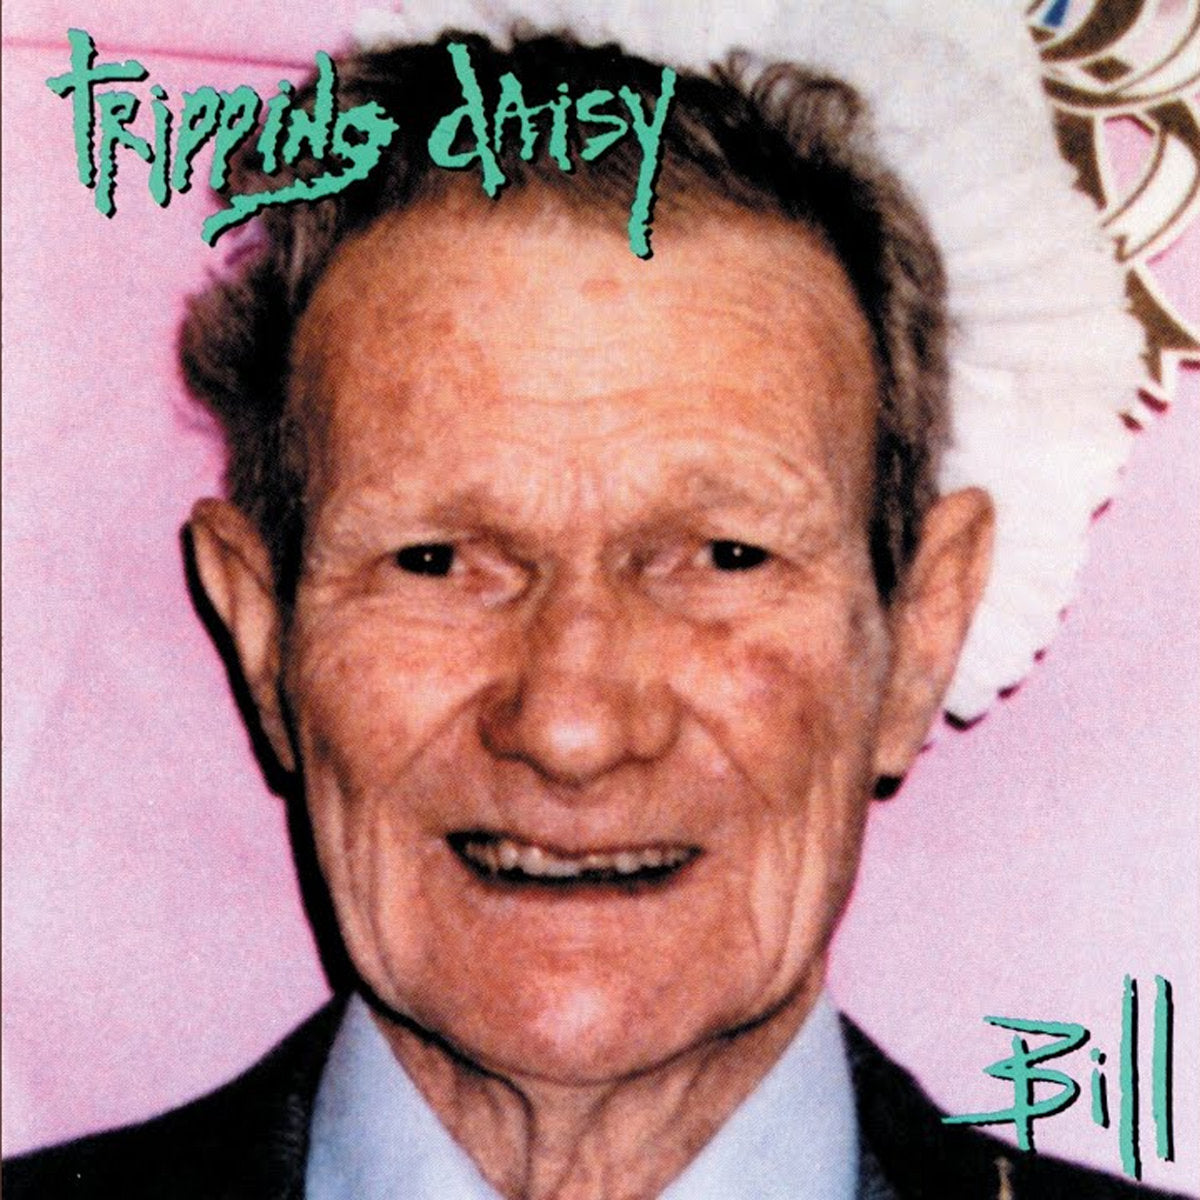 Tripping Daisy - Bill LP